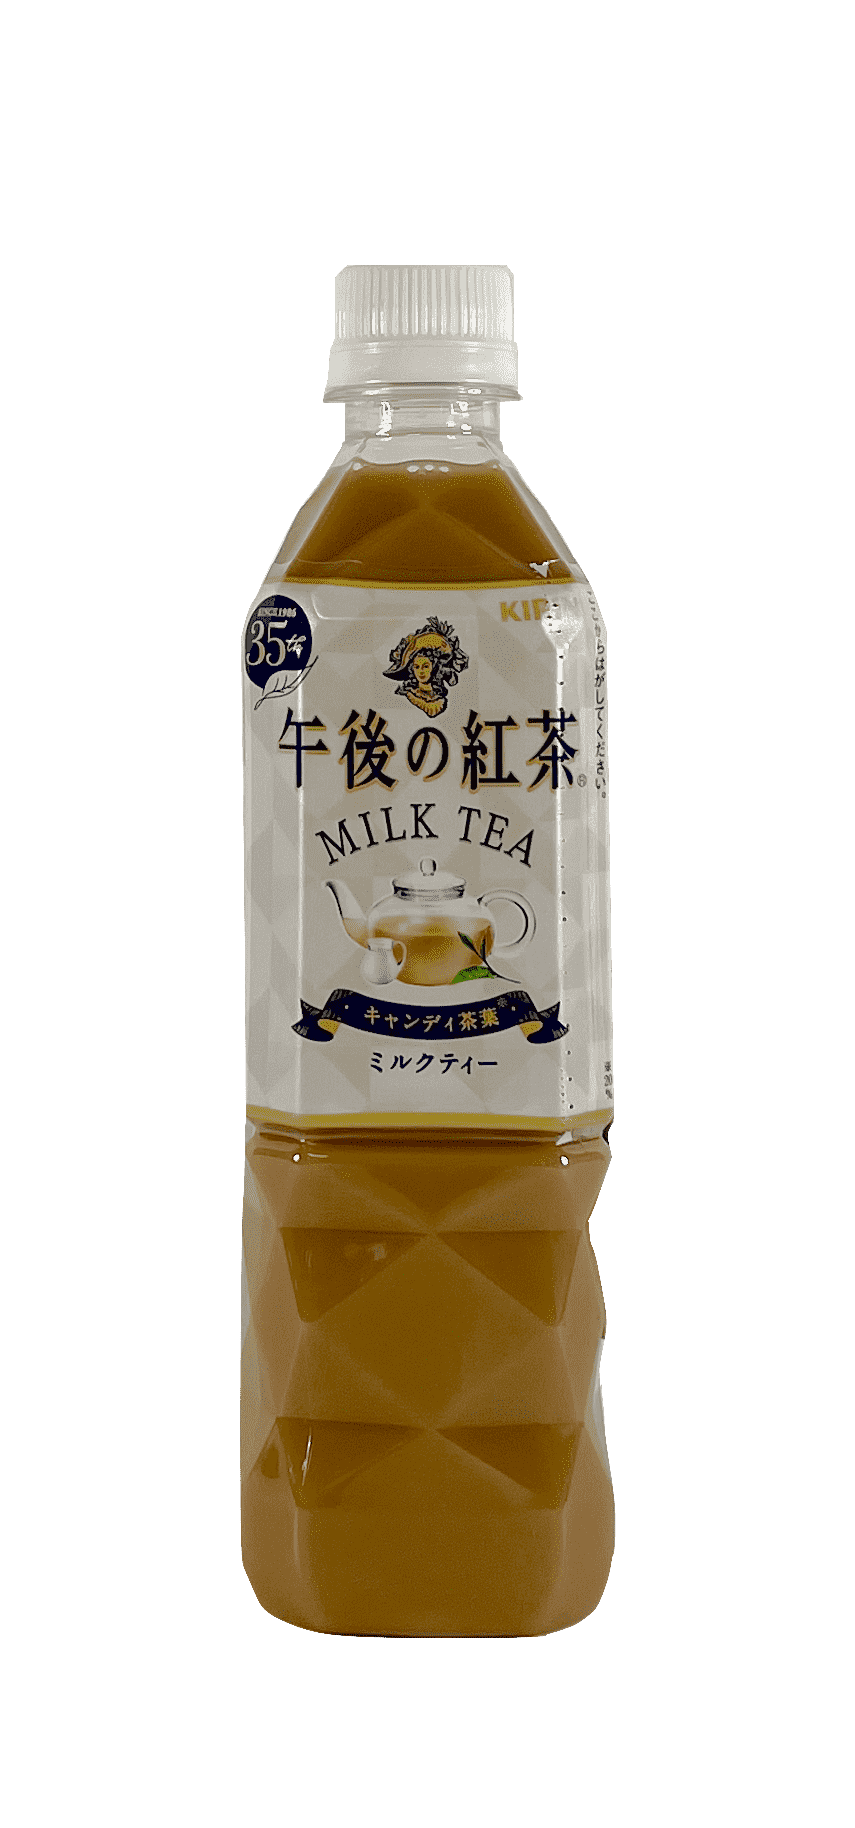 Drink Afternoon Milk Tea 500 ml Kirin Japan